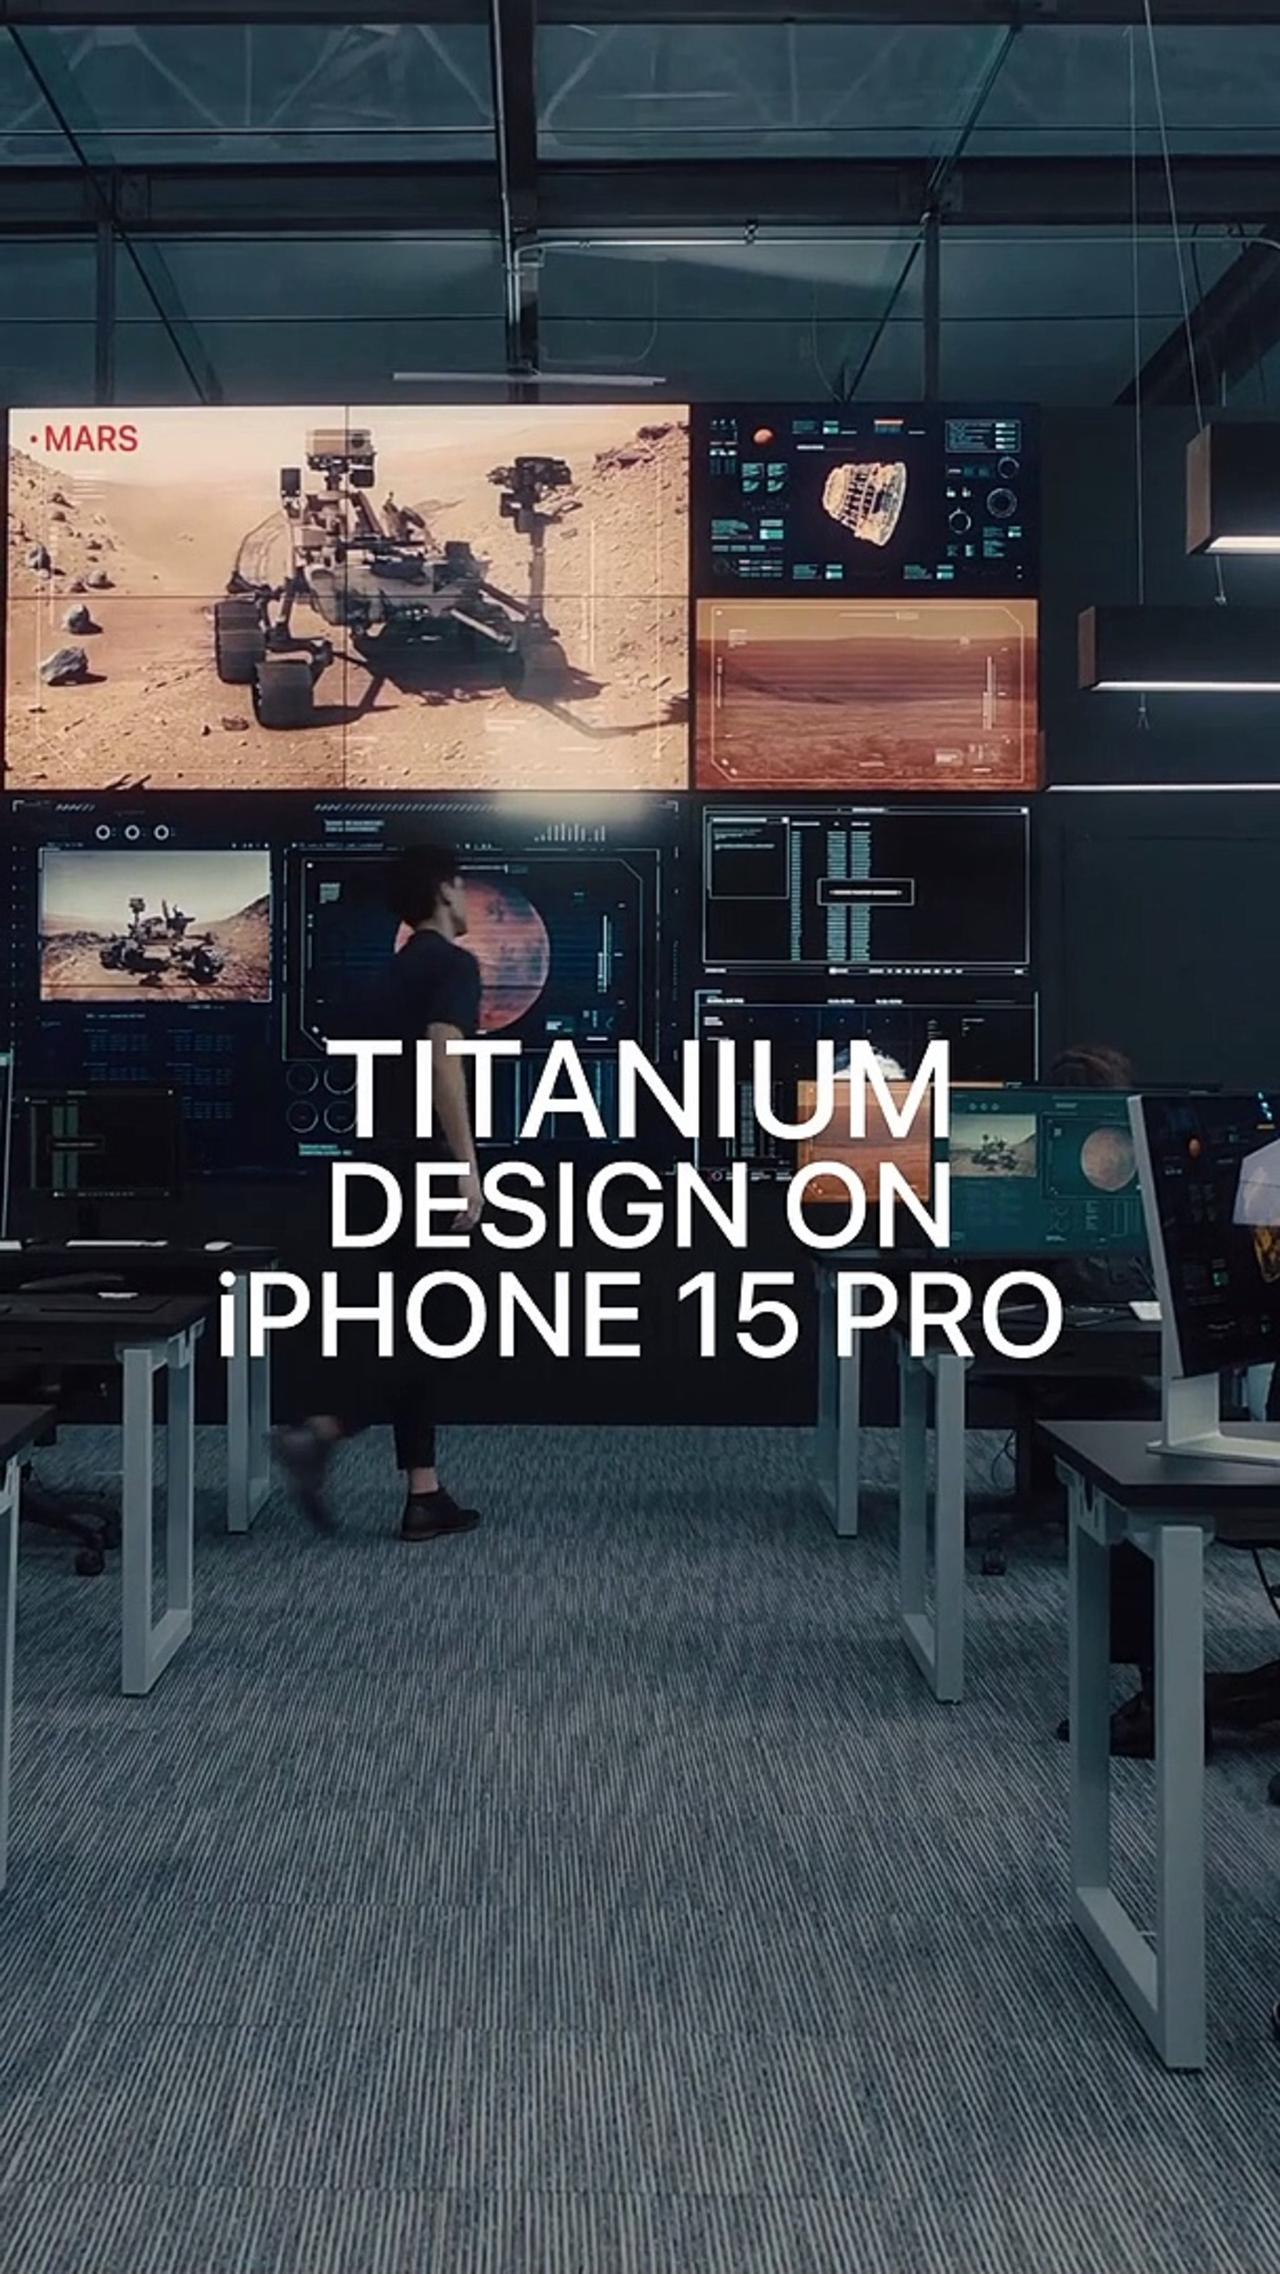 iPhone 15 Pro made with aerospace-grade titanium